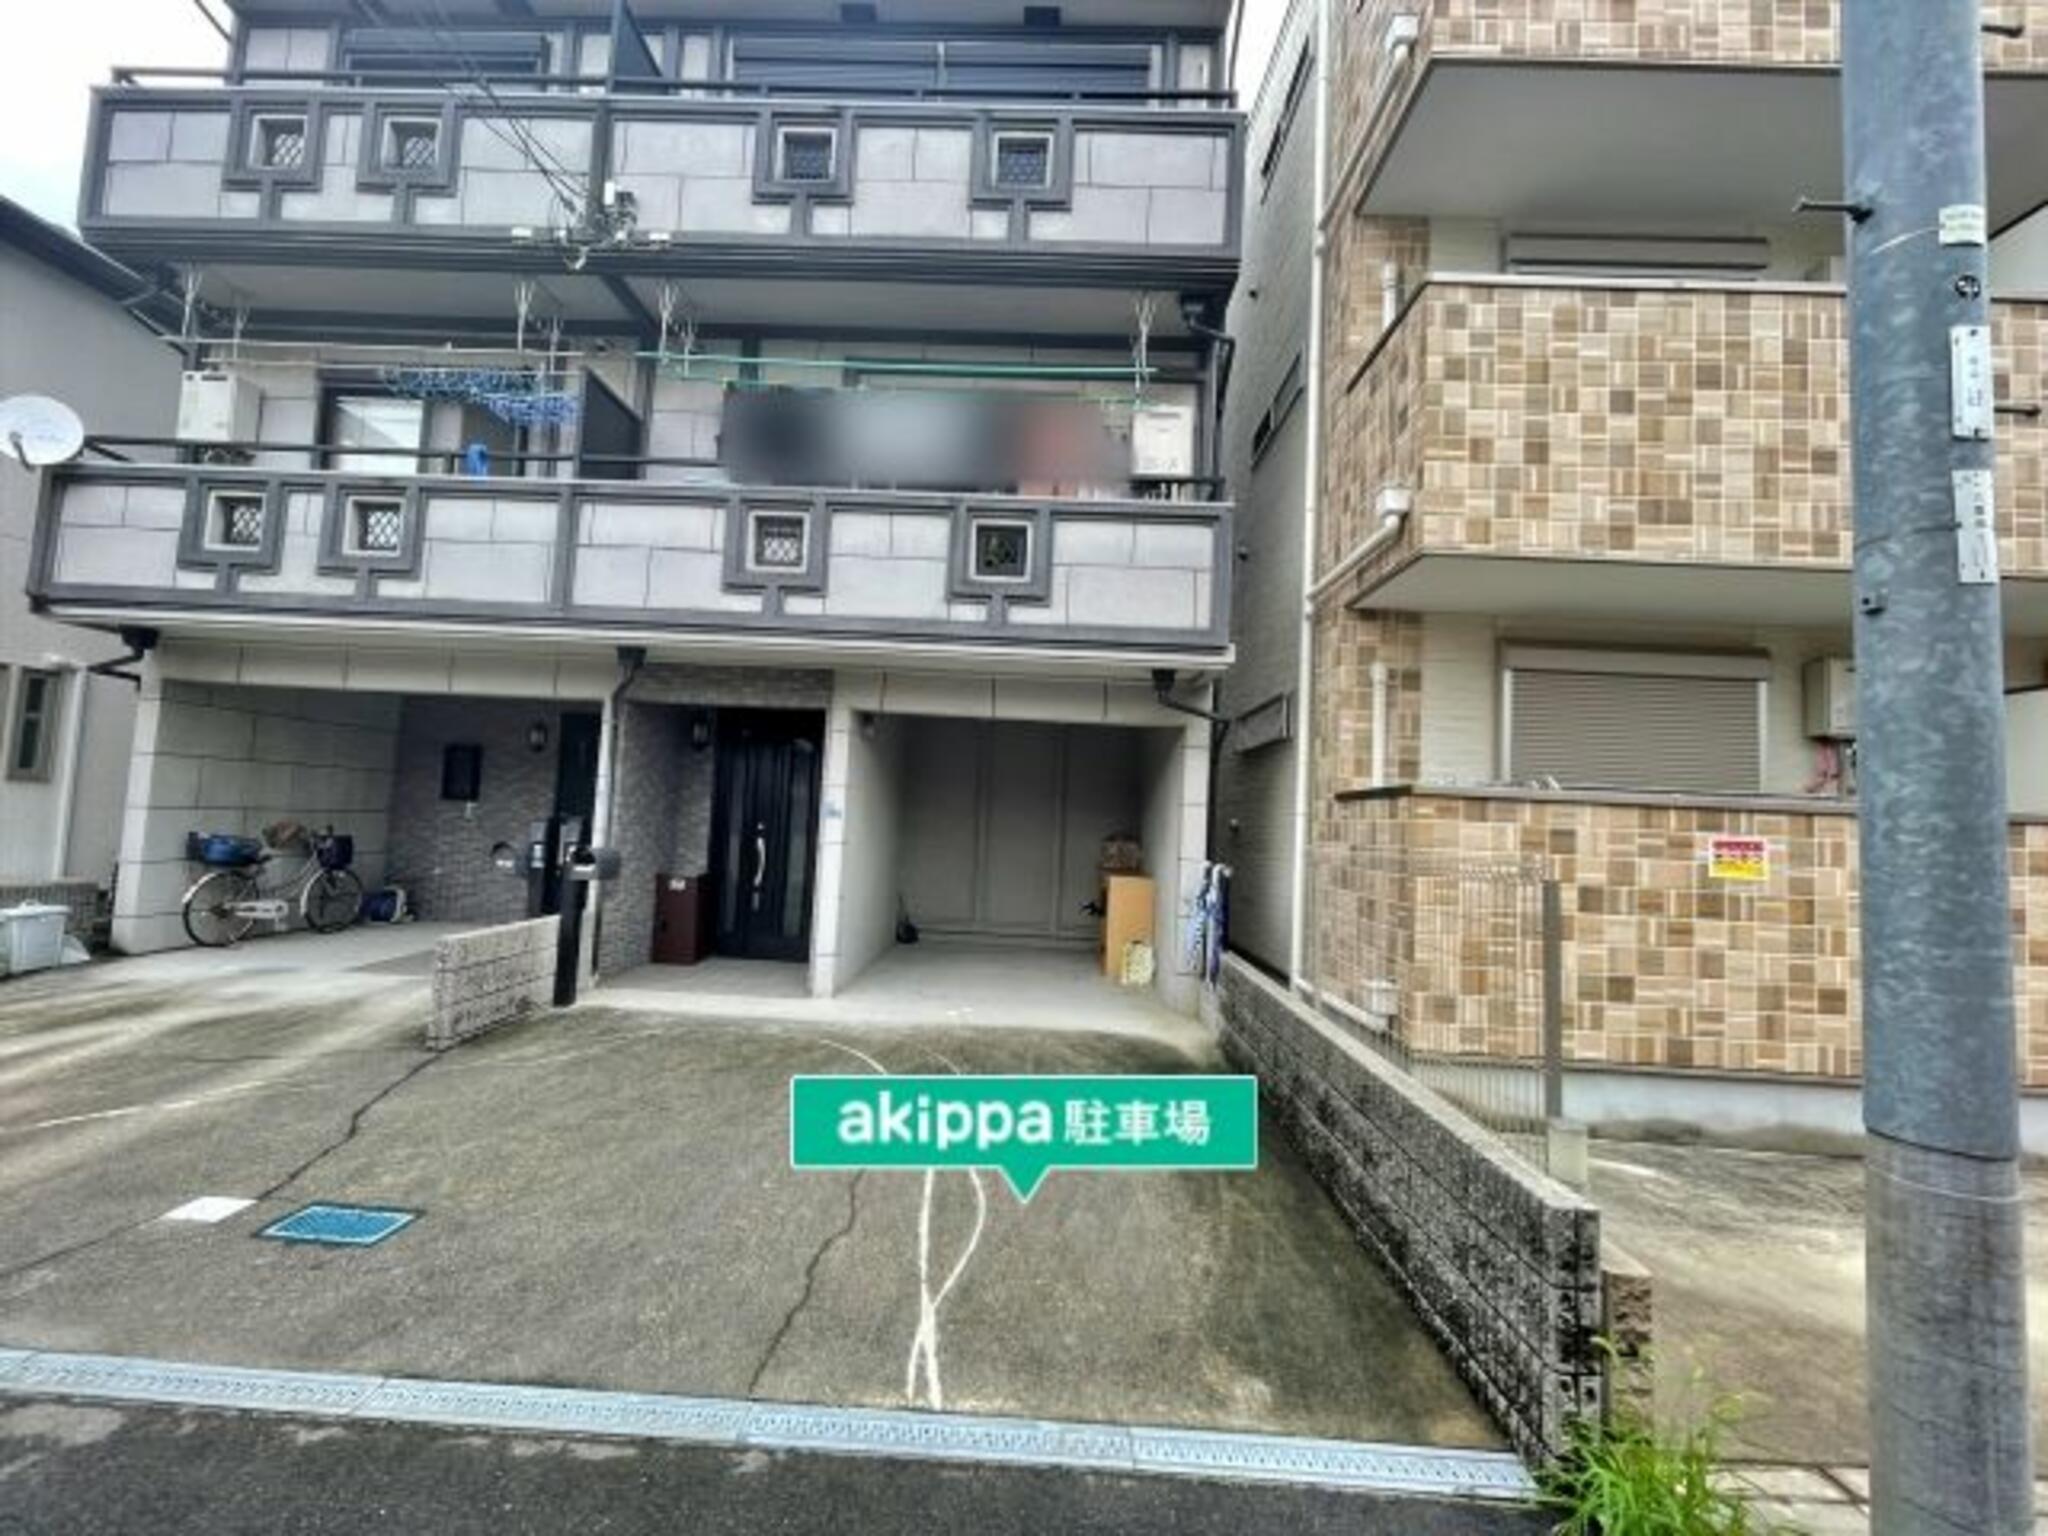 akippa駐車場:大阪府守口市八雲西町1丁目26-5の代表写真4